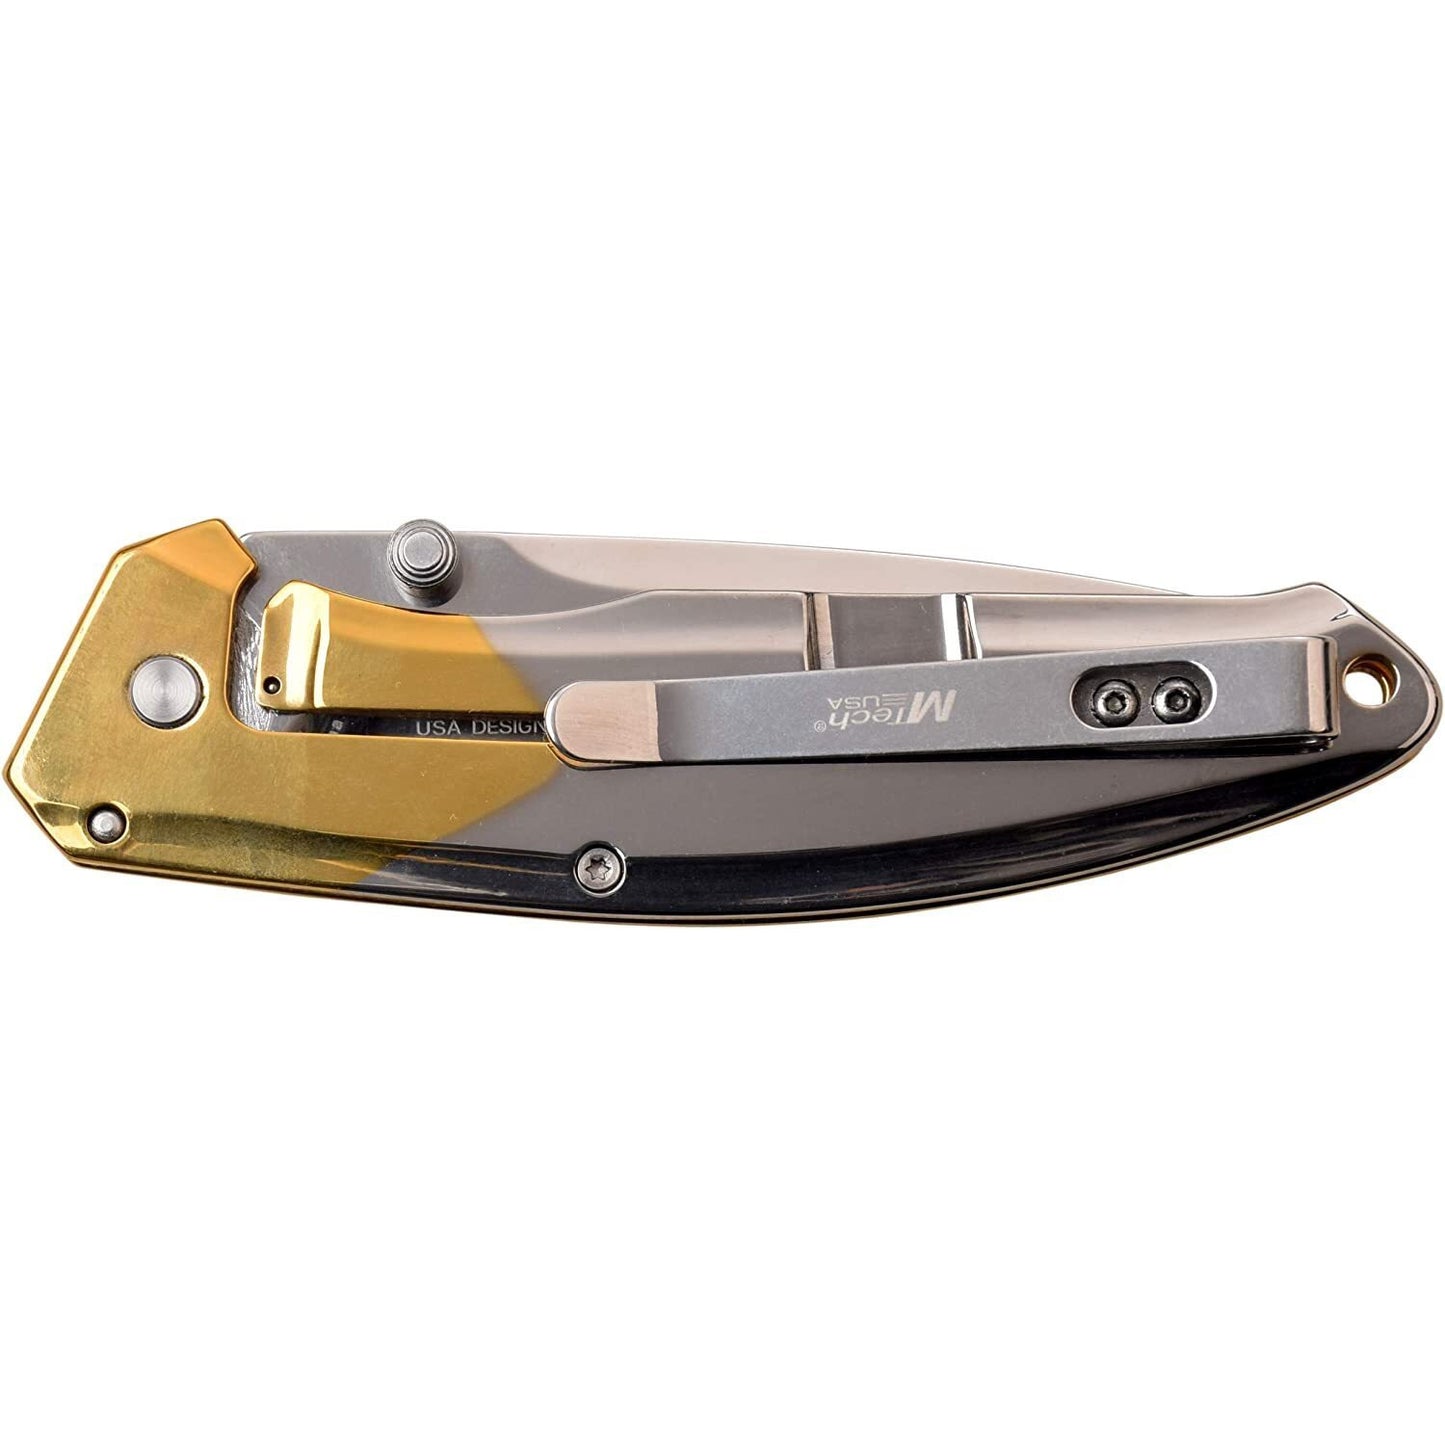 Mtech Mtech Tactical Drop Point Fine Edge Blade Folding Knife - Tinite Coated Handle Frame Lock #mt-1032Gd Dim Gray